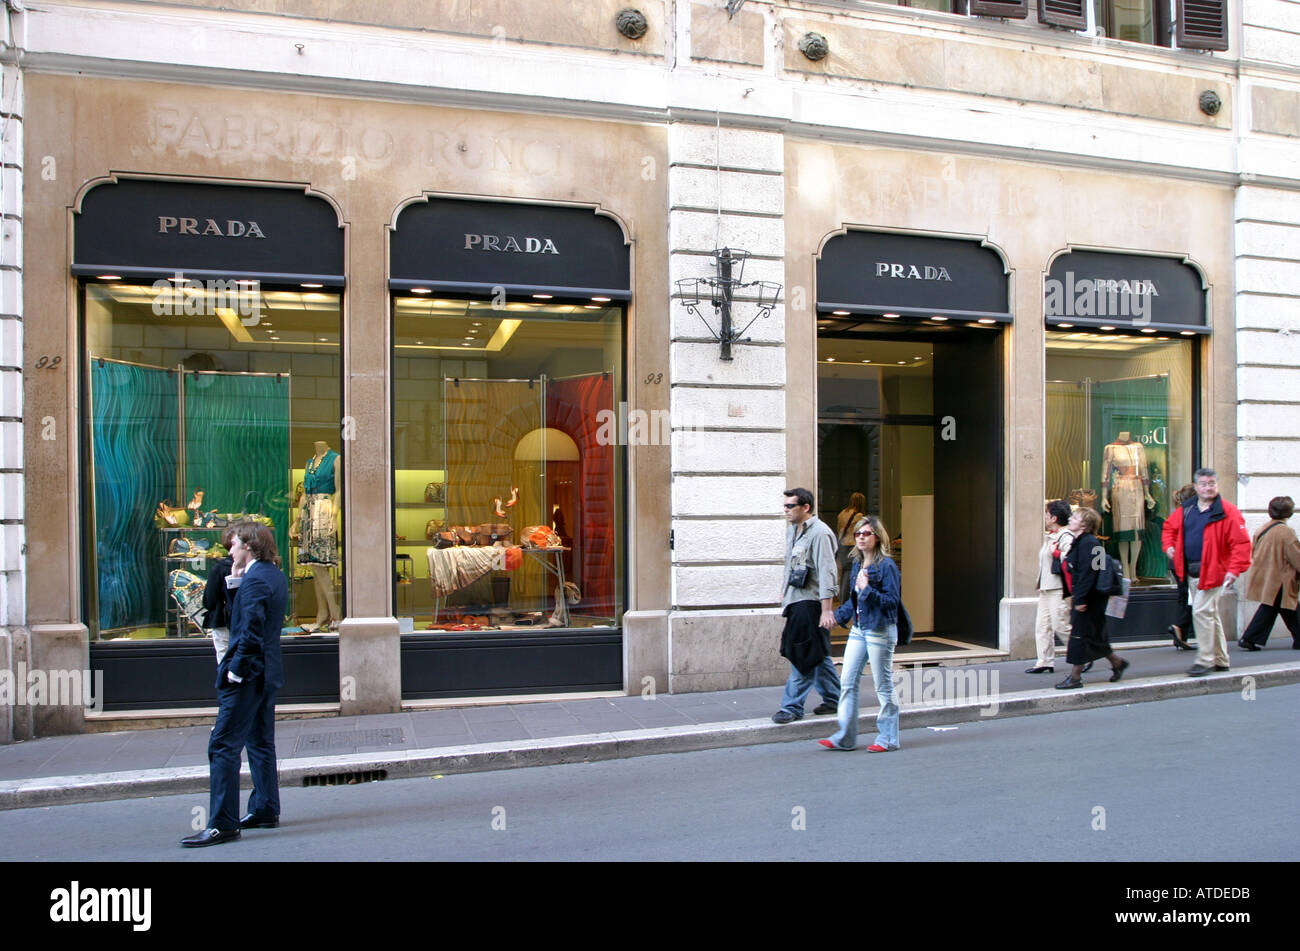 Prada store in Rome Italy Stock Photo - Alamy